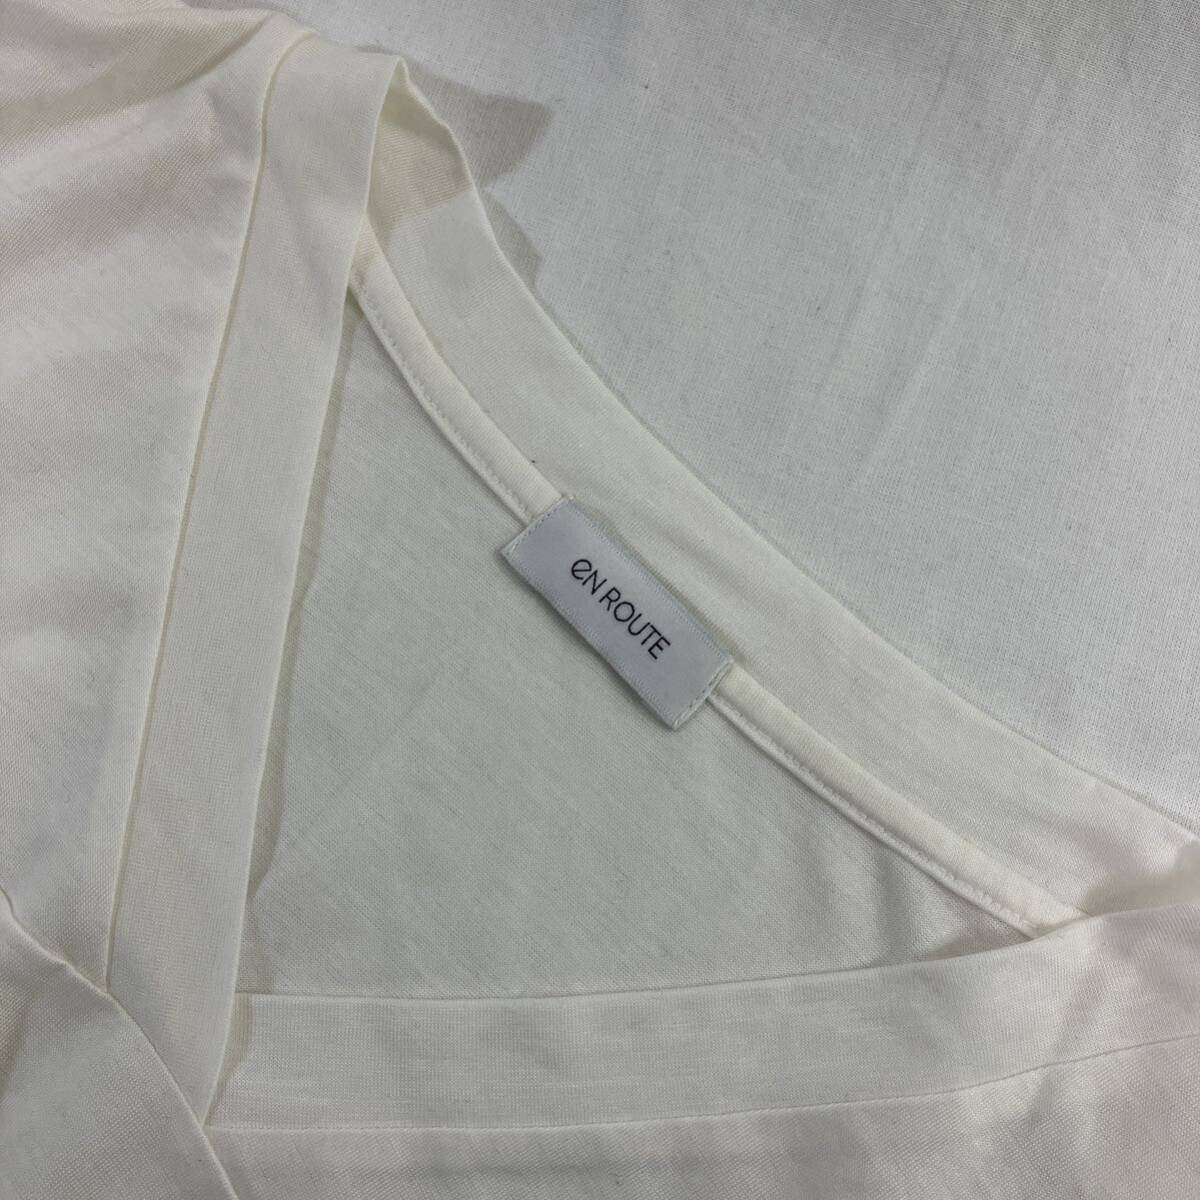 EN ROUTE アンルート　men's メンズ　半袖　tシャツ 薄手　トップス　夏服 size:00（XXS） collar:White ホワイト